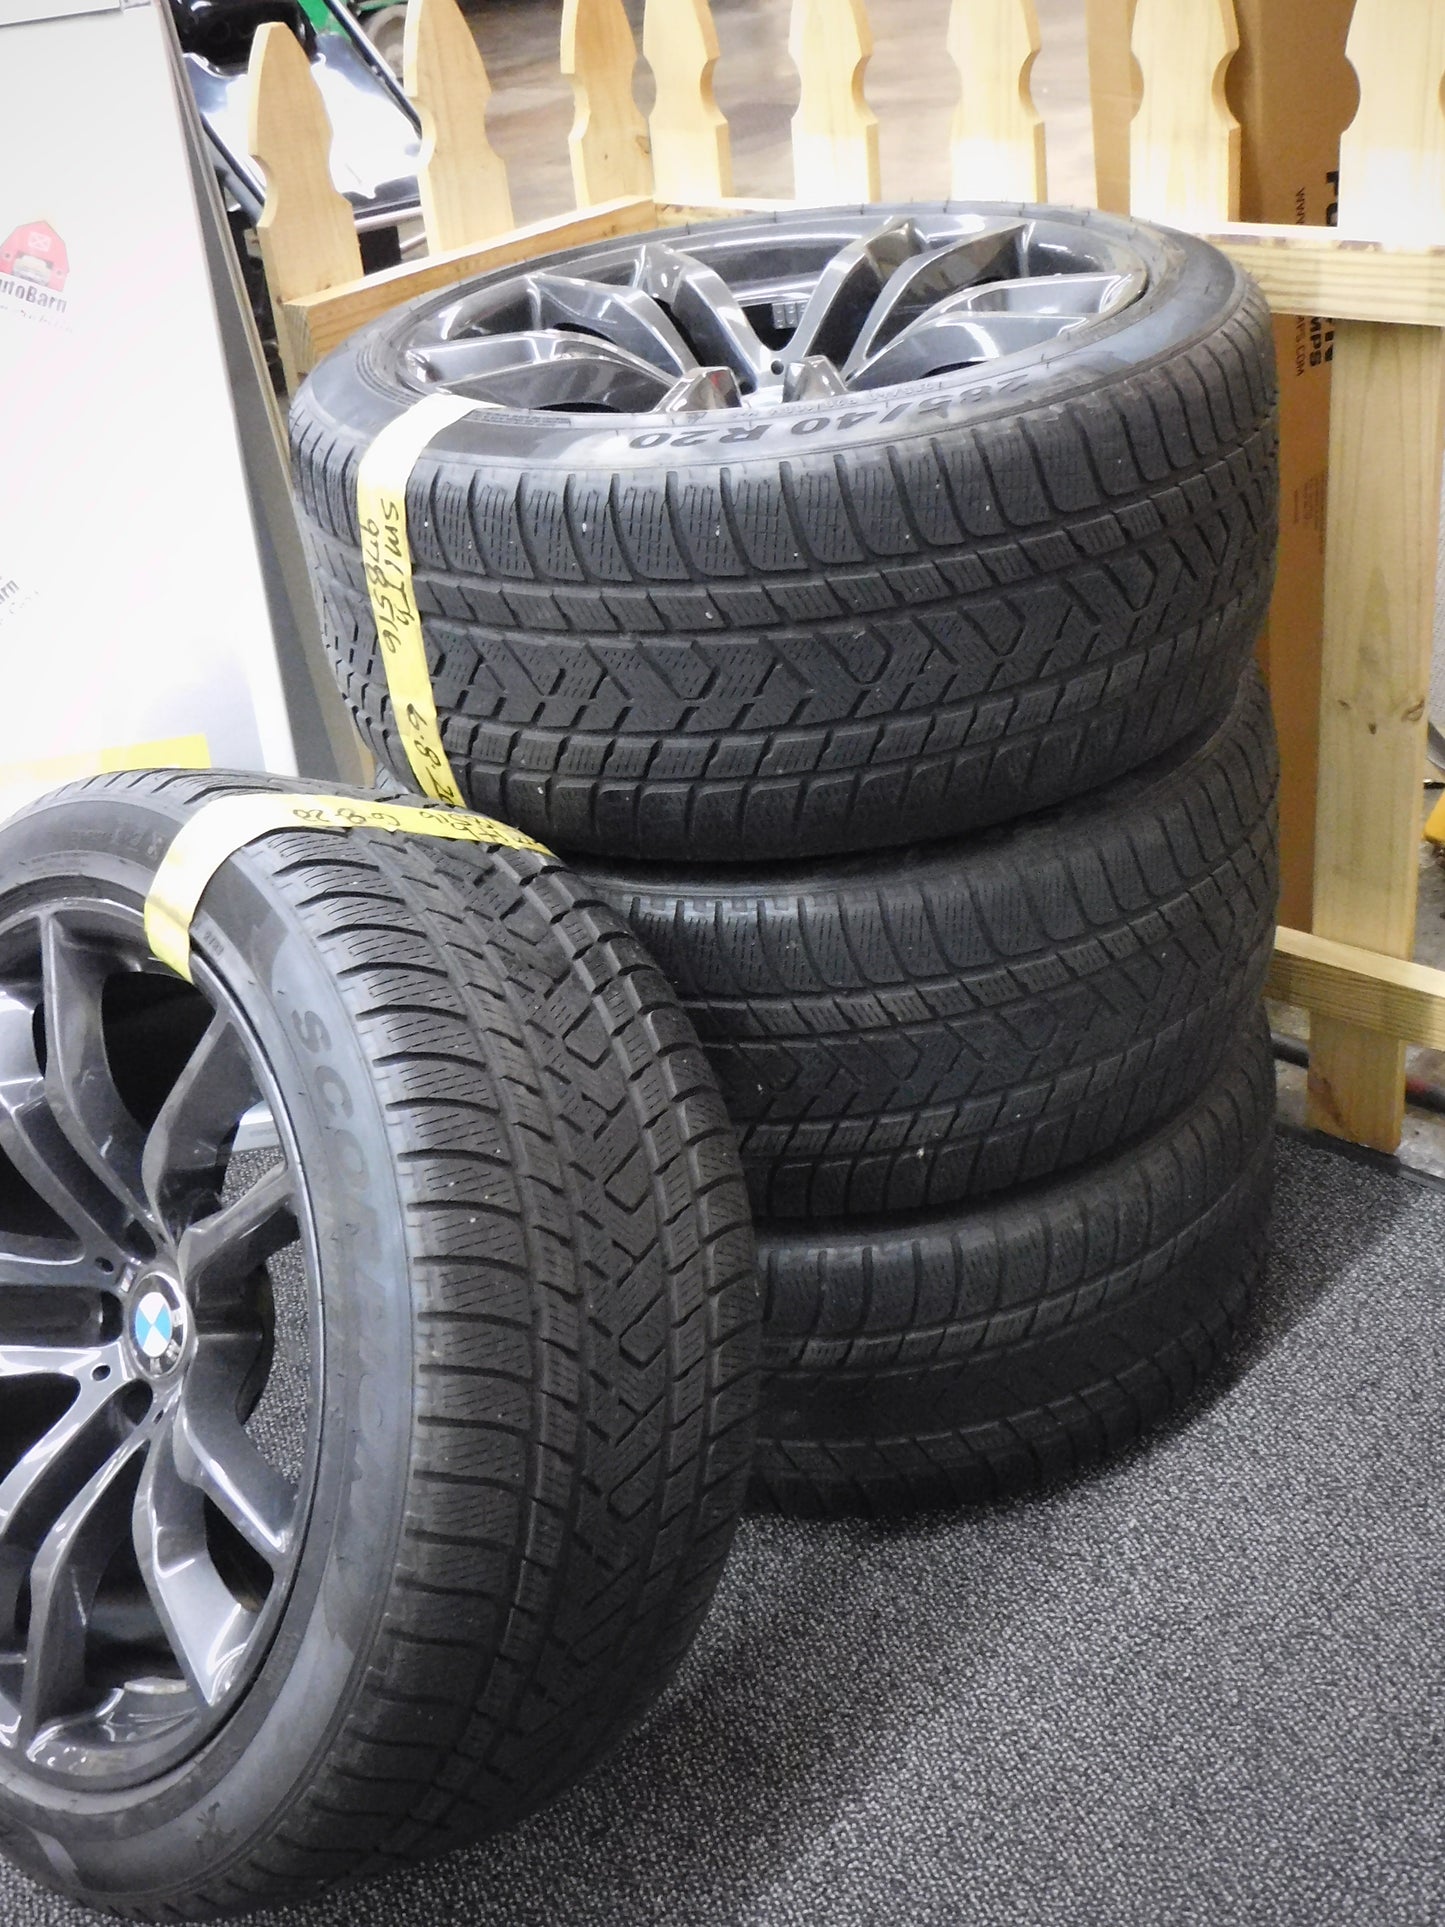 Set of 2014 BMW Ronal Wheels/Tires